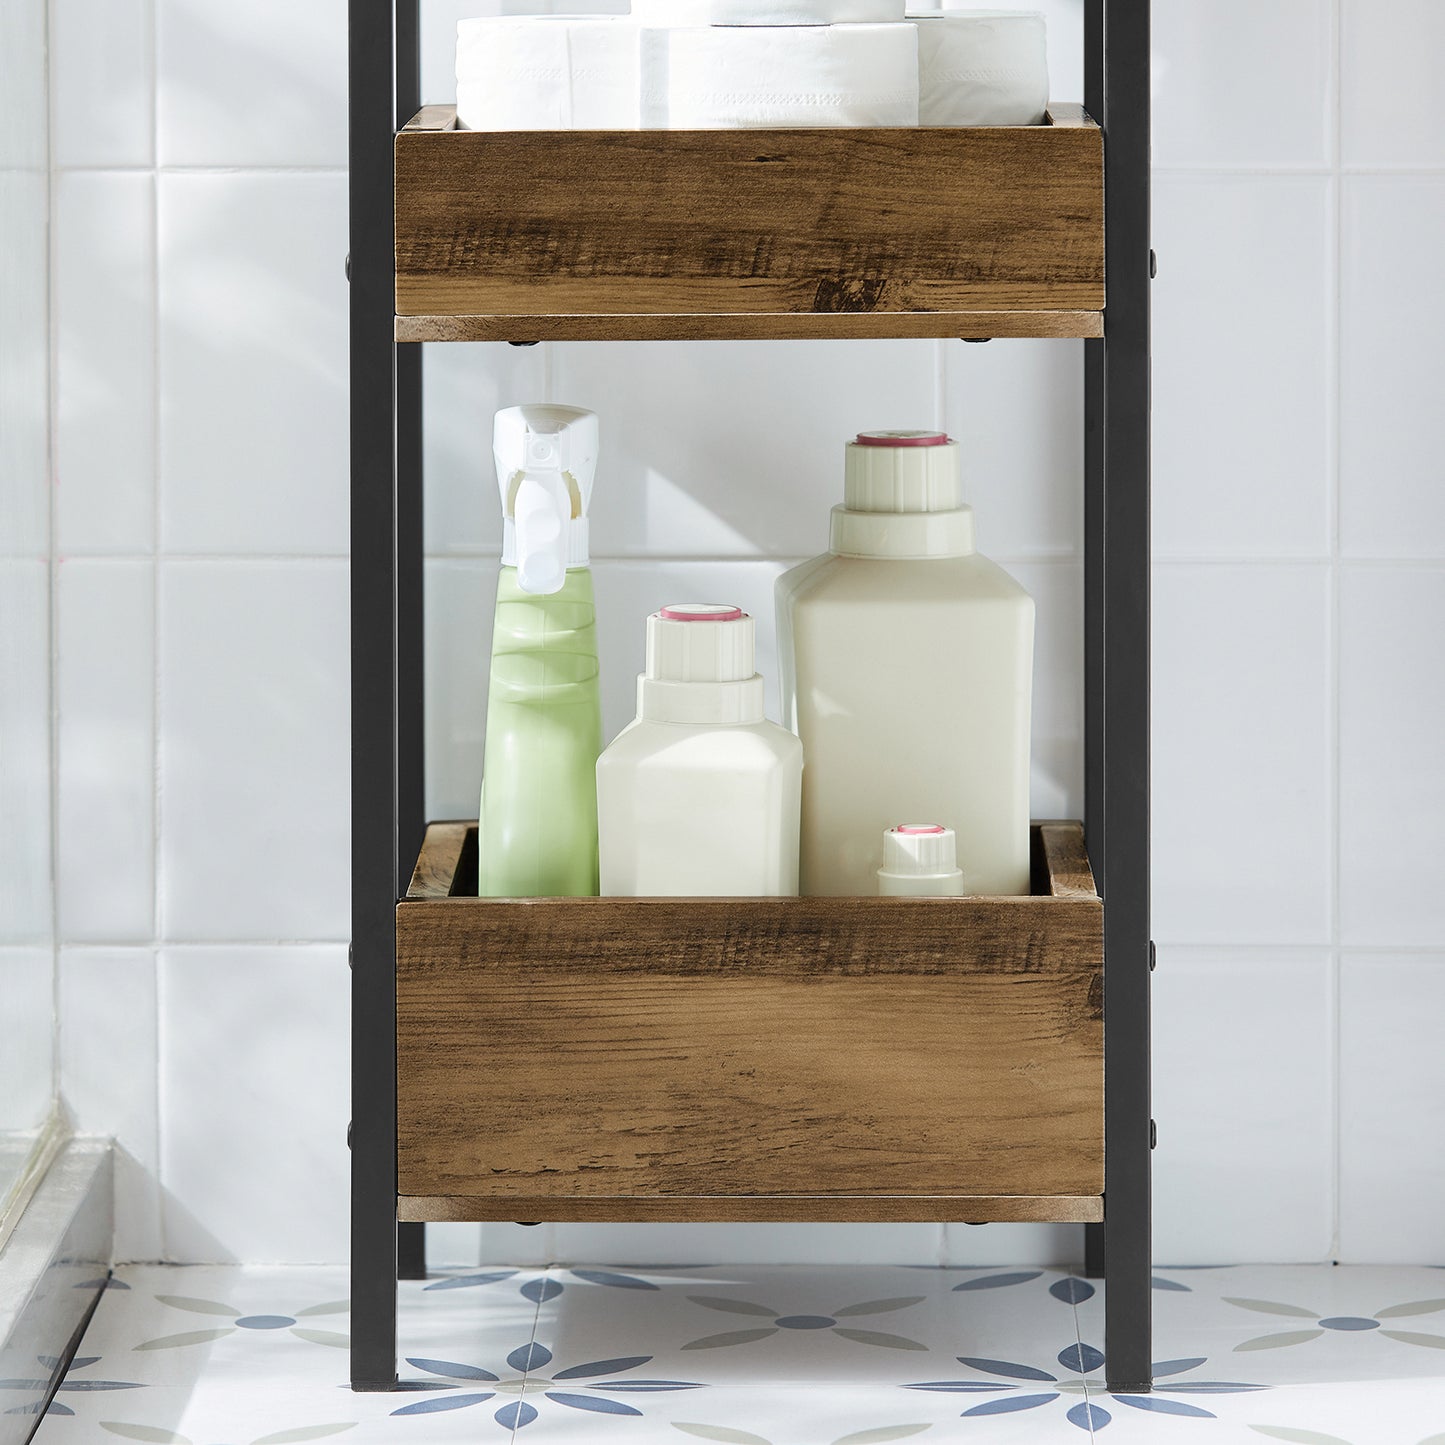 SoBuy FRG226-F, 3 Tiers Bathroom Shelf Storage Display Shelf Organizer Shelving Unit